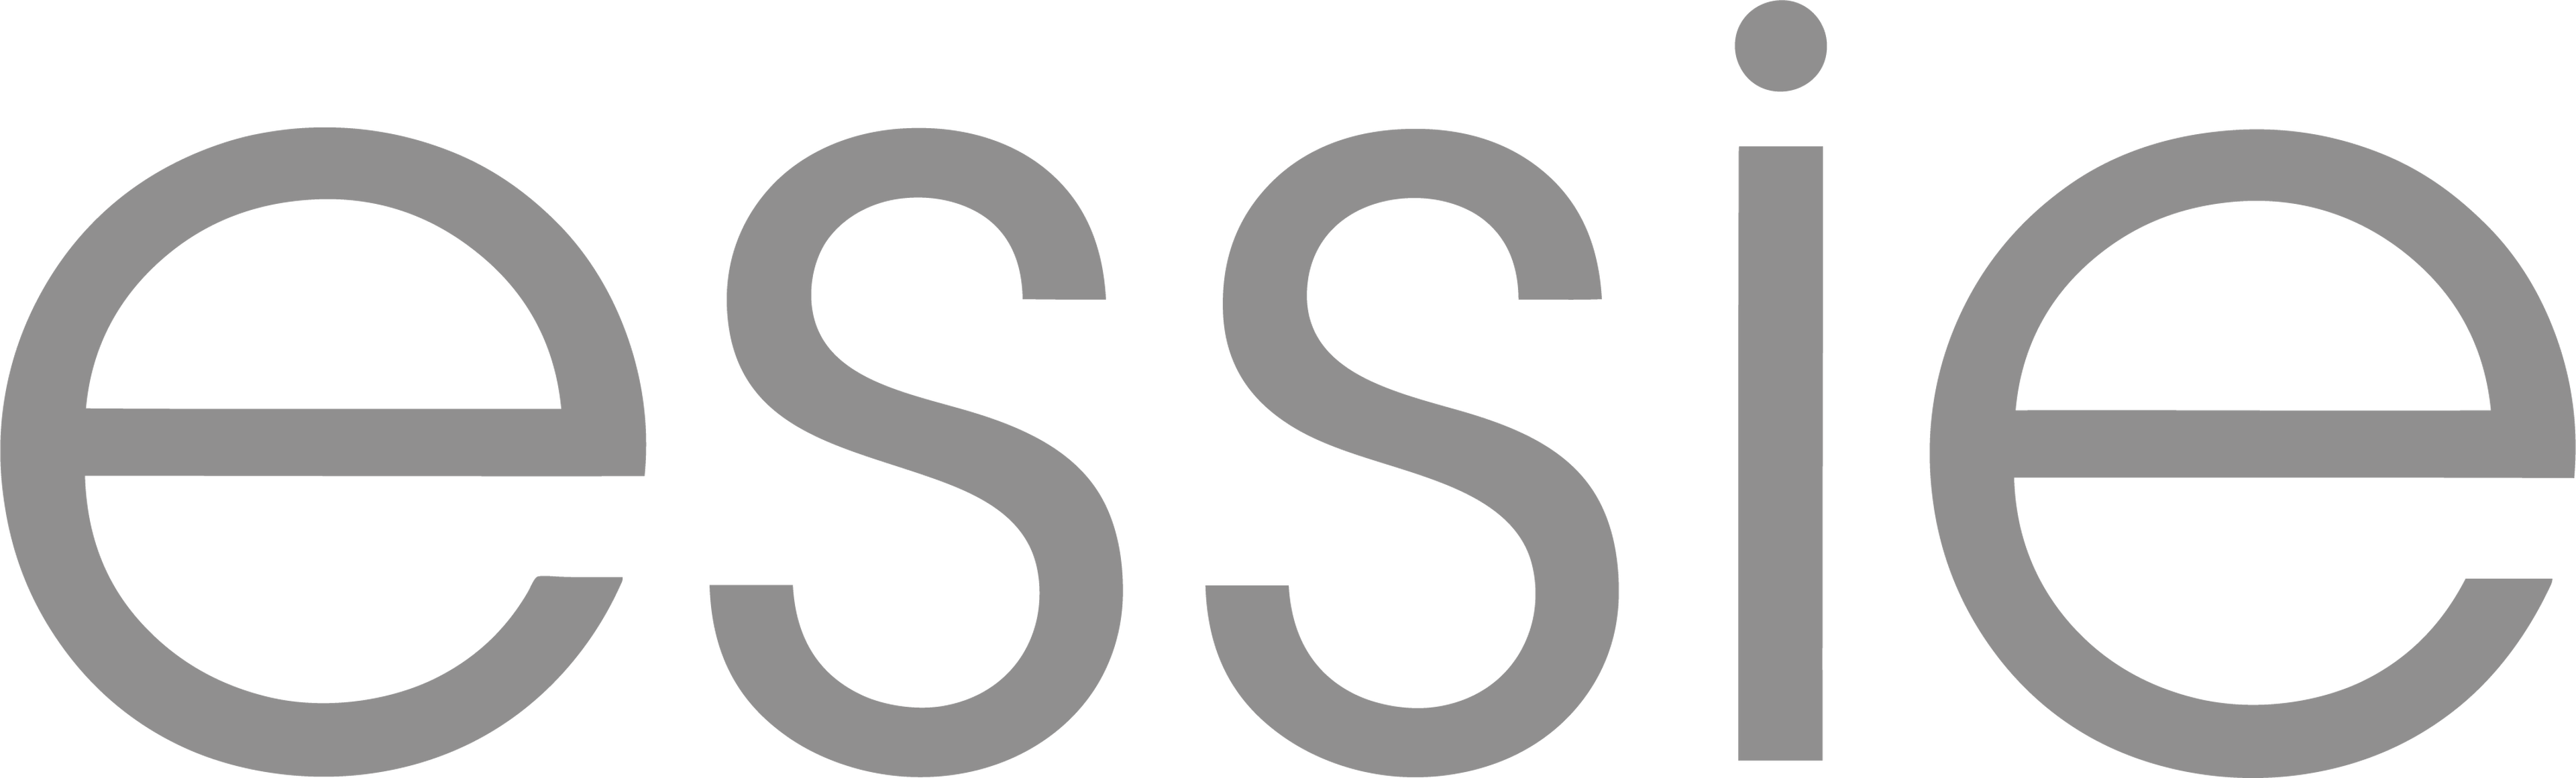 Essie logotype